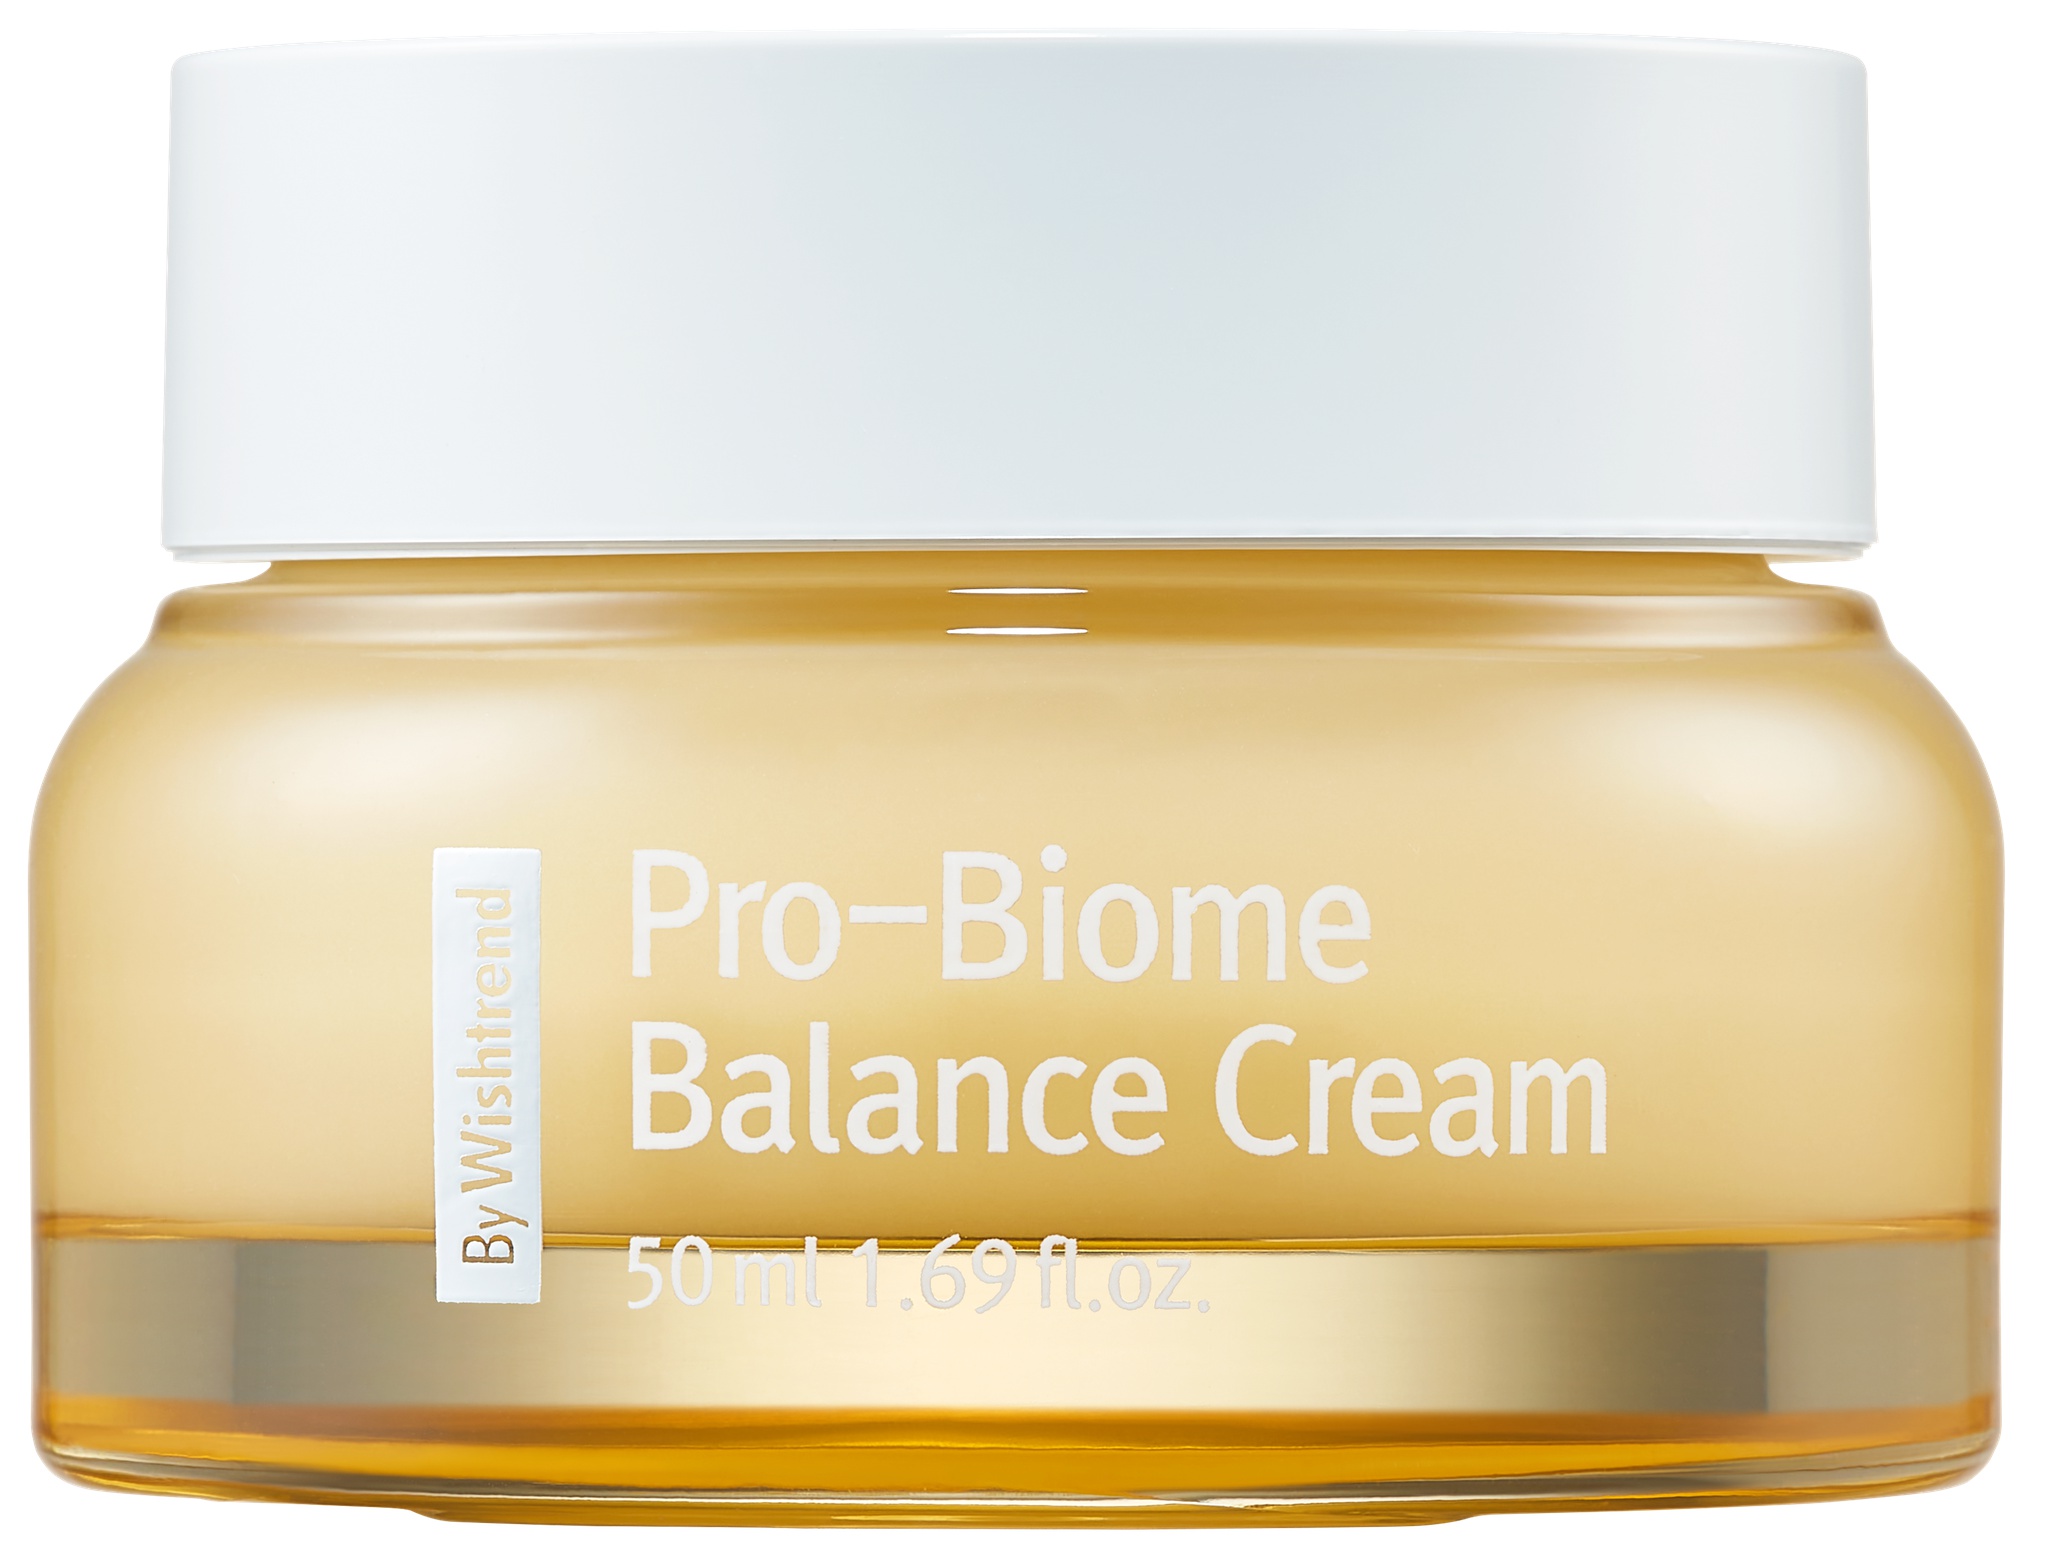 By Wishtrend Pro-Biome Balance Cream